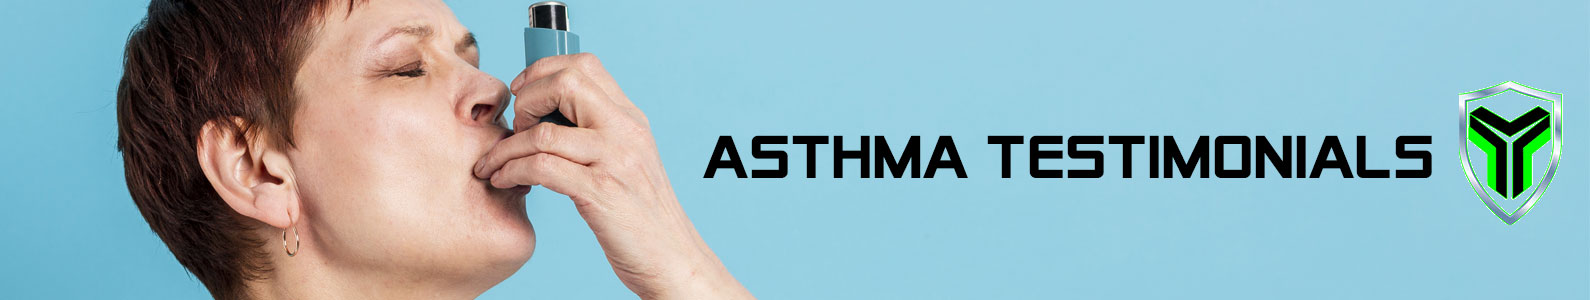 Asthma testimonials